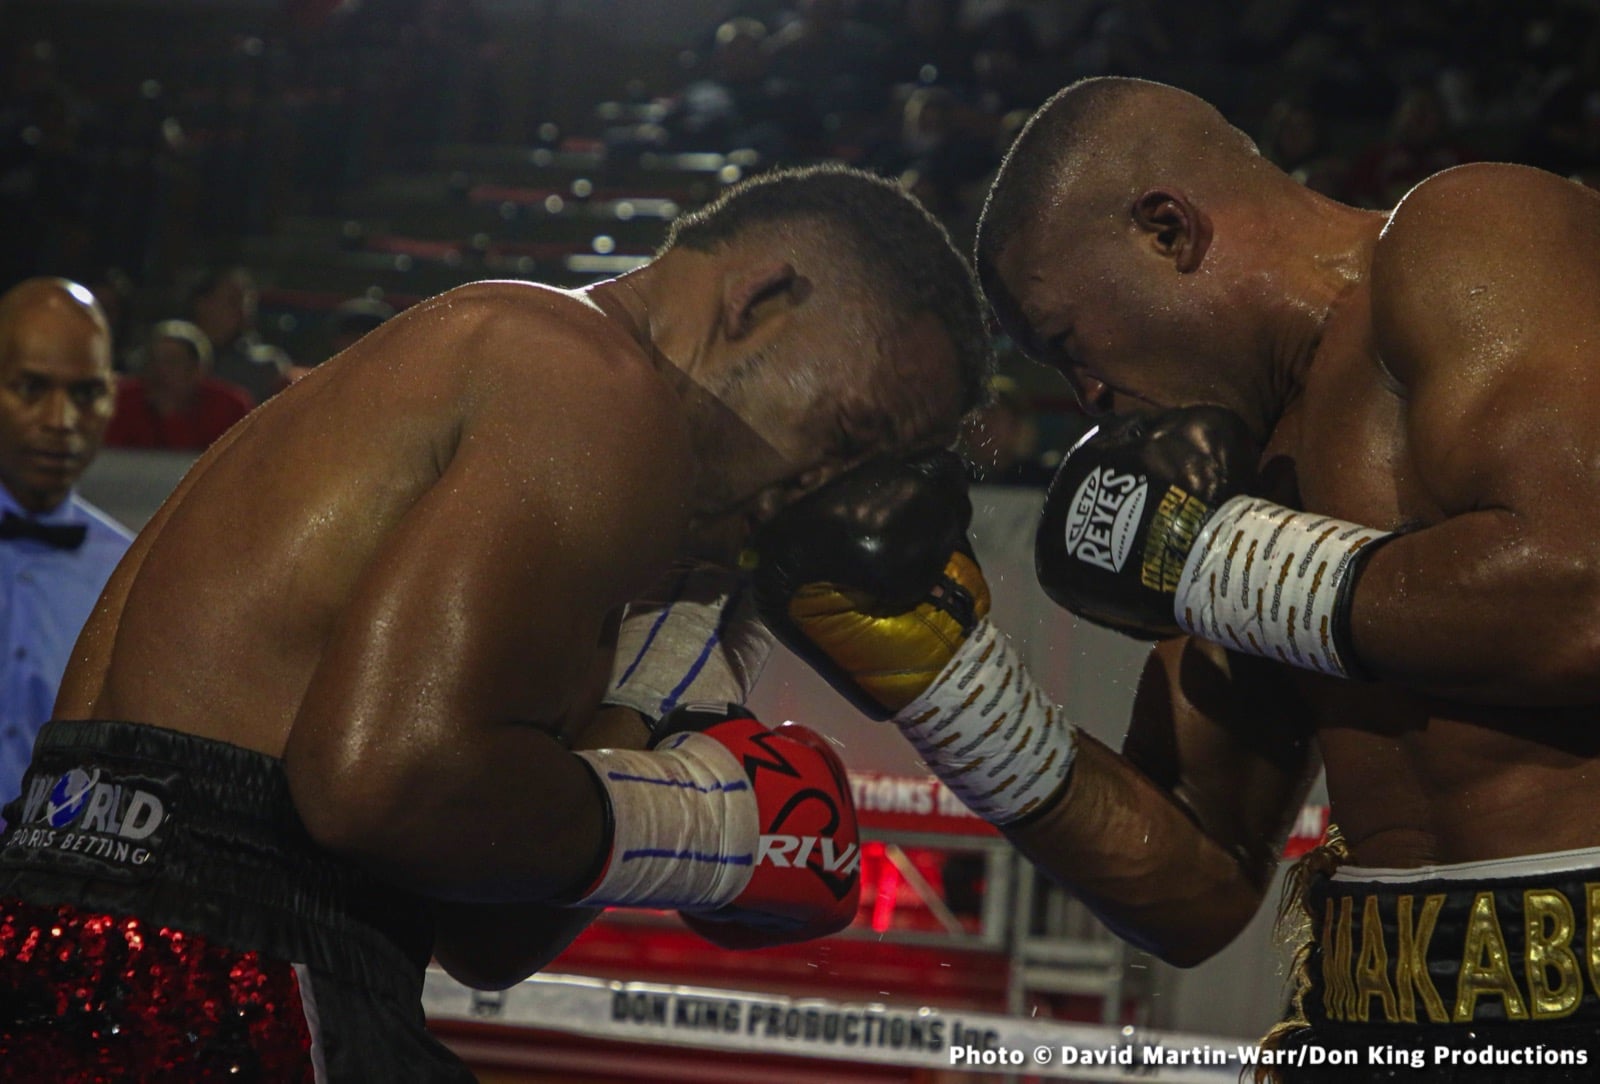 Jonathan Guidry boxing image / photo